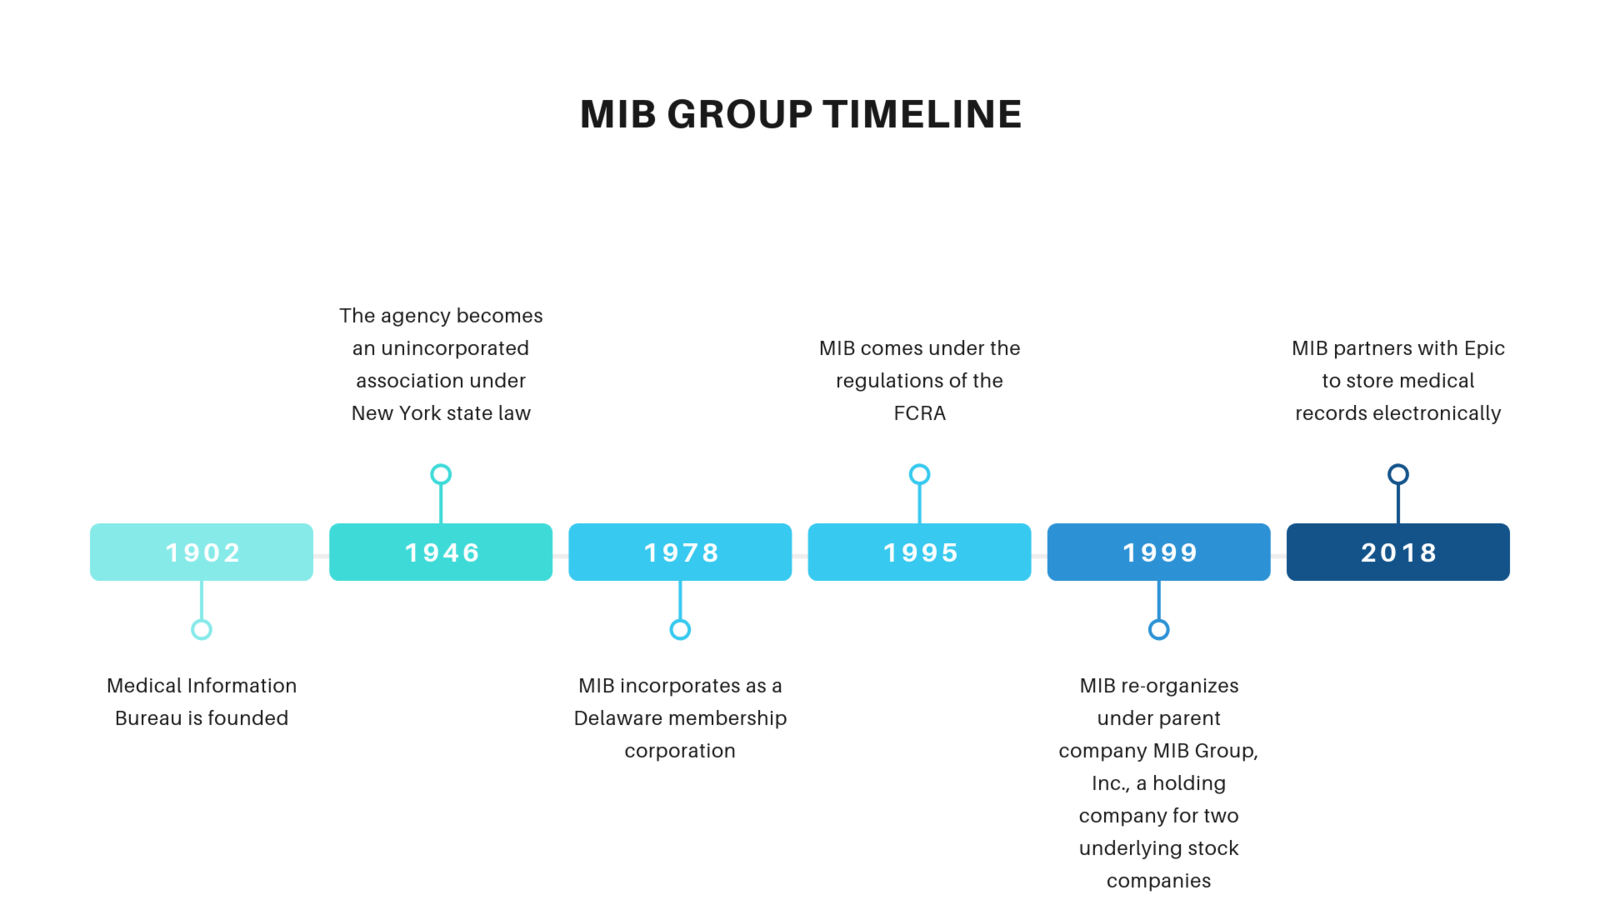 MIB Group timeline